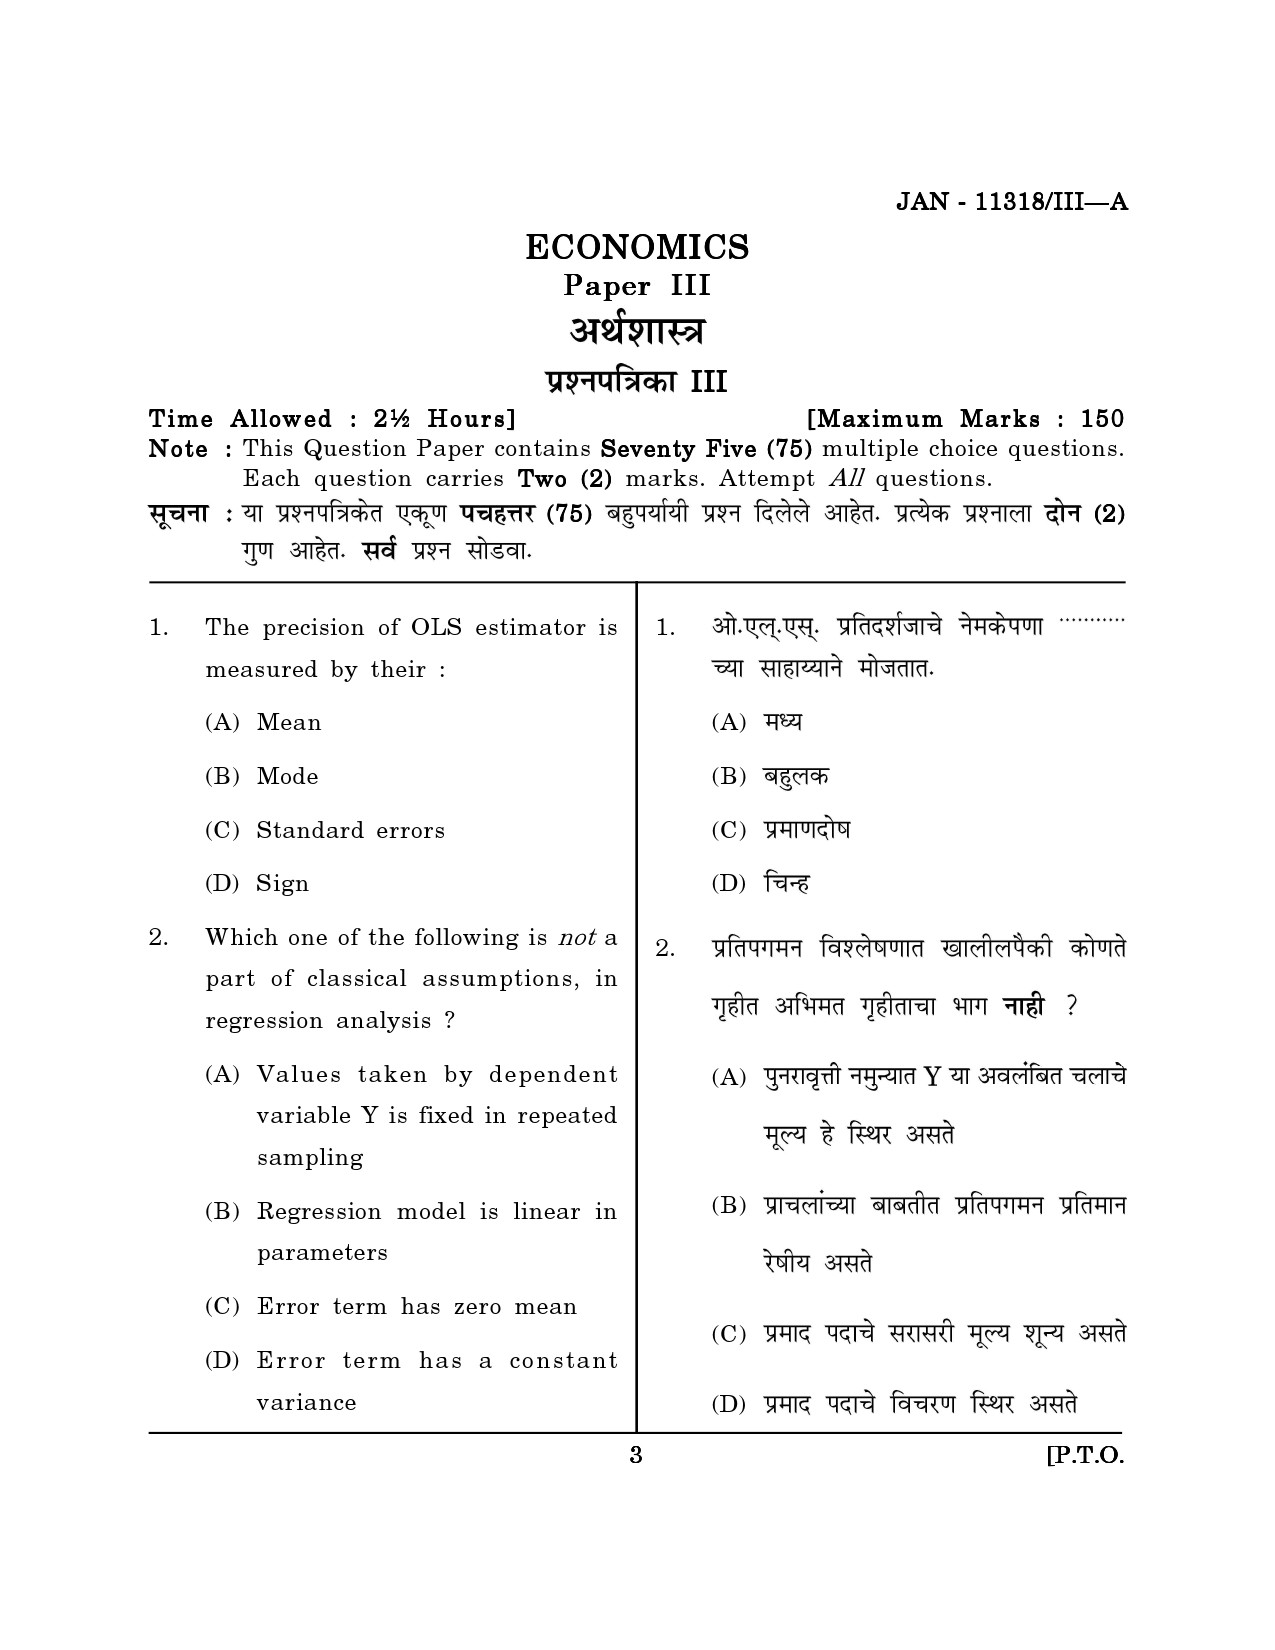 Maharashtra SET Economics Question Paper III January 2018 2